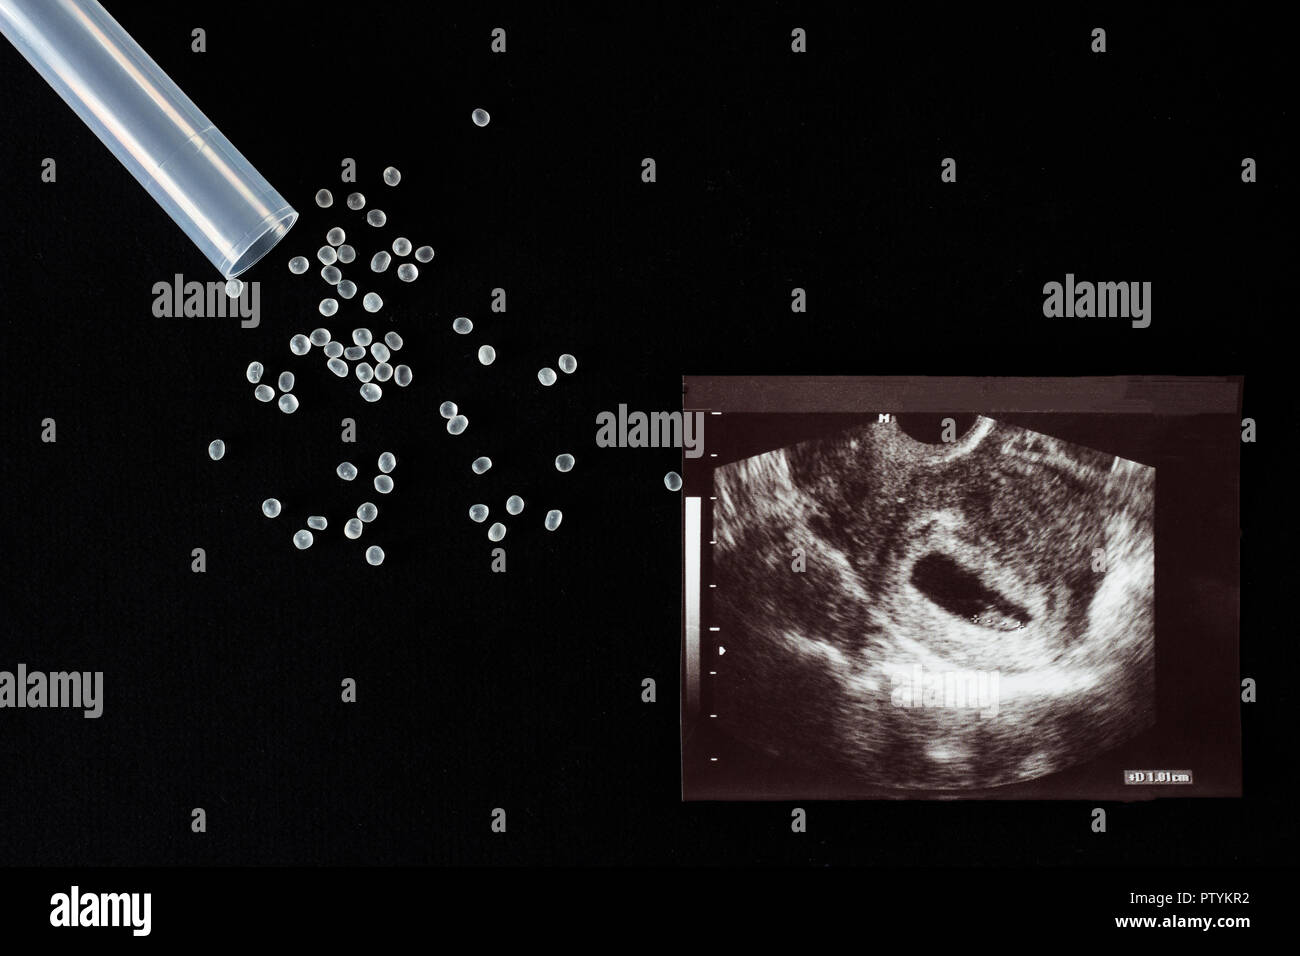 Uzi shot, pills and test tube on a black background, abortion, close-up Stock Photo